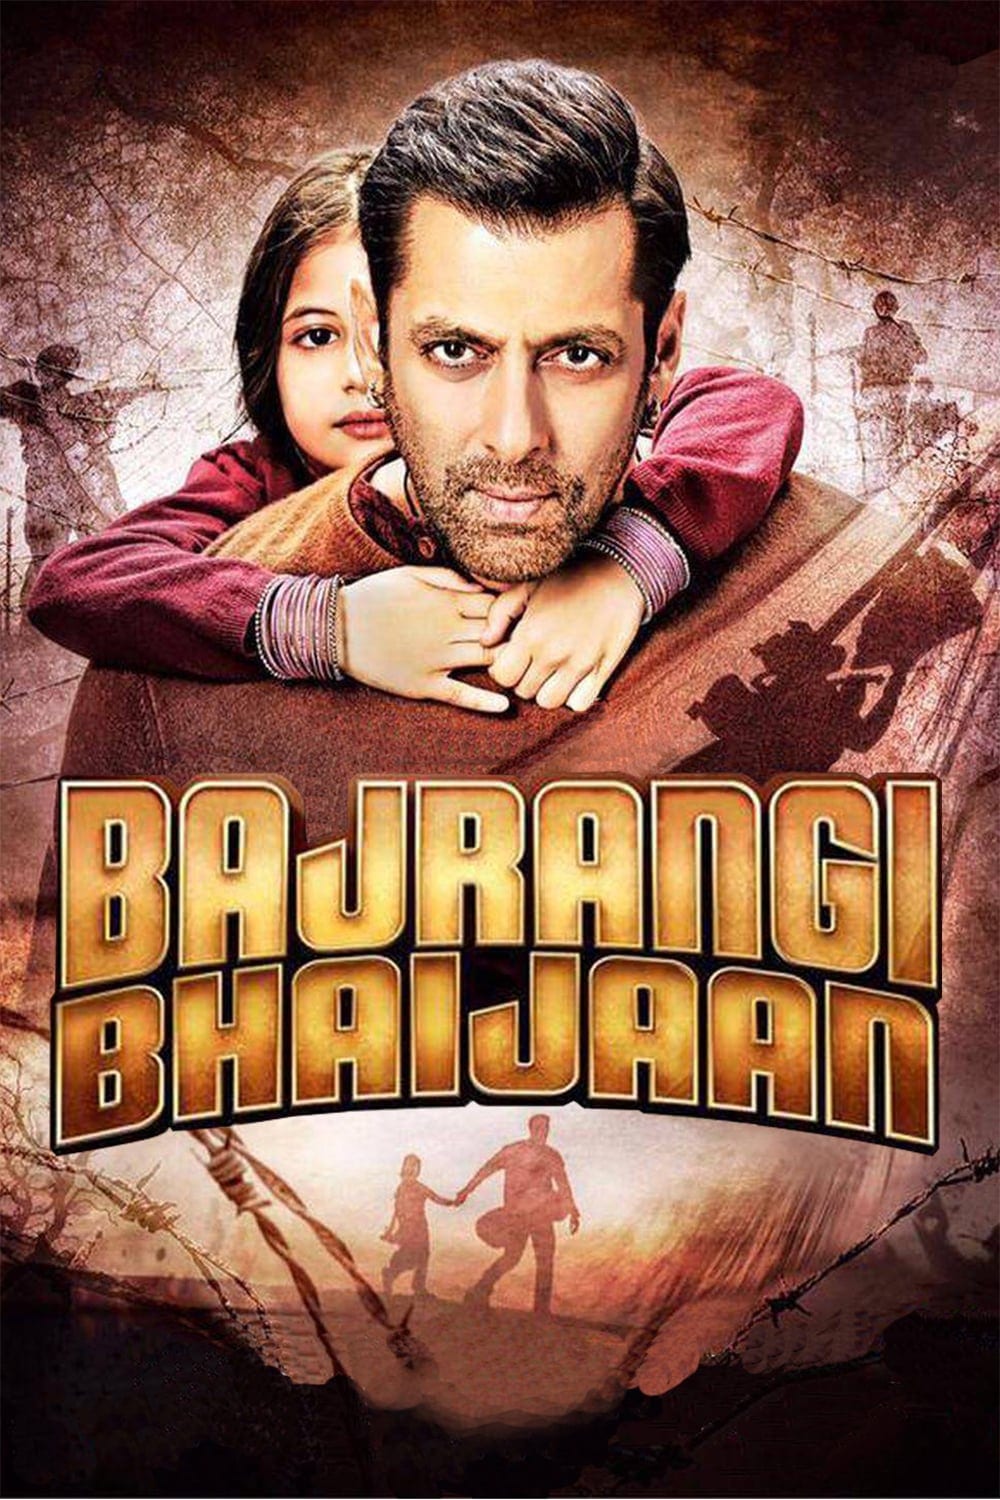 Poster for the movie "Bajrangi Bhaijaan"